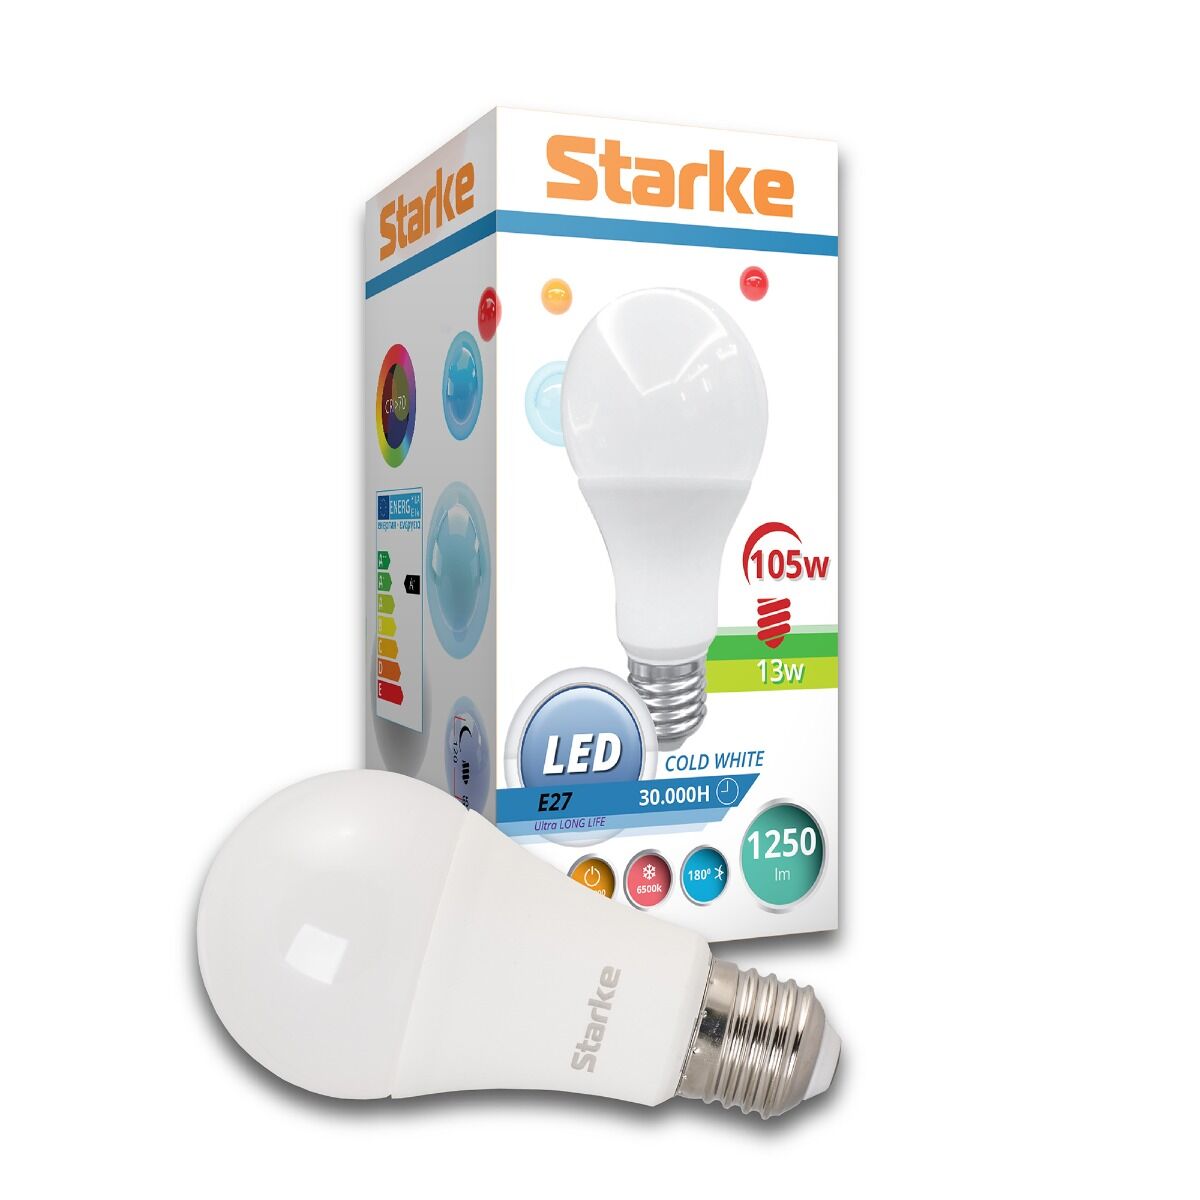 Bec LED forma clasica marca STARKE, model Plus, putere 11W, echivalenta 90W, dulie E27, lumina rece